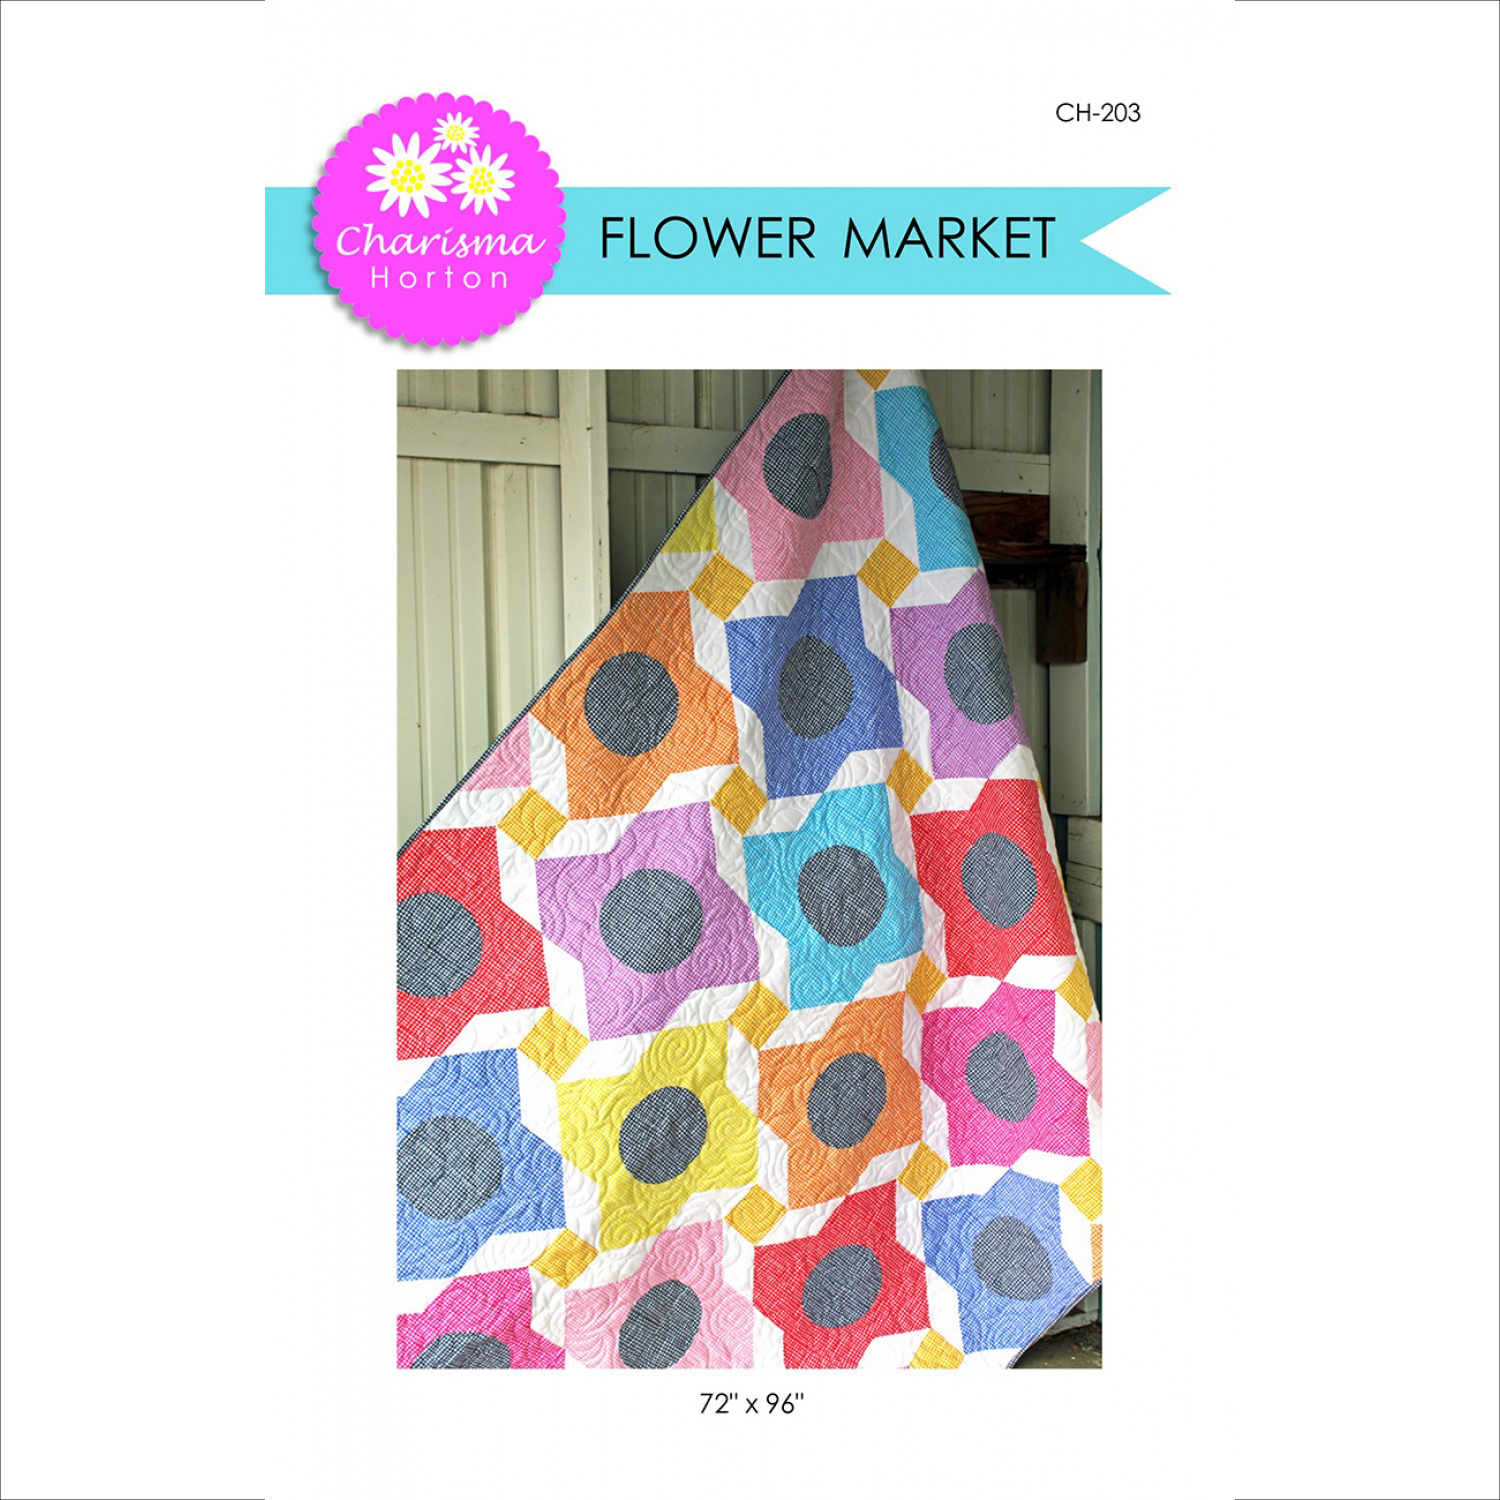 Flower Market by Charisma Horton